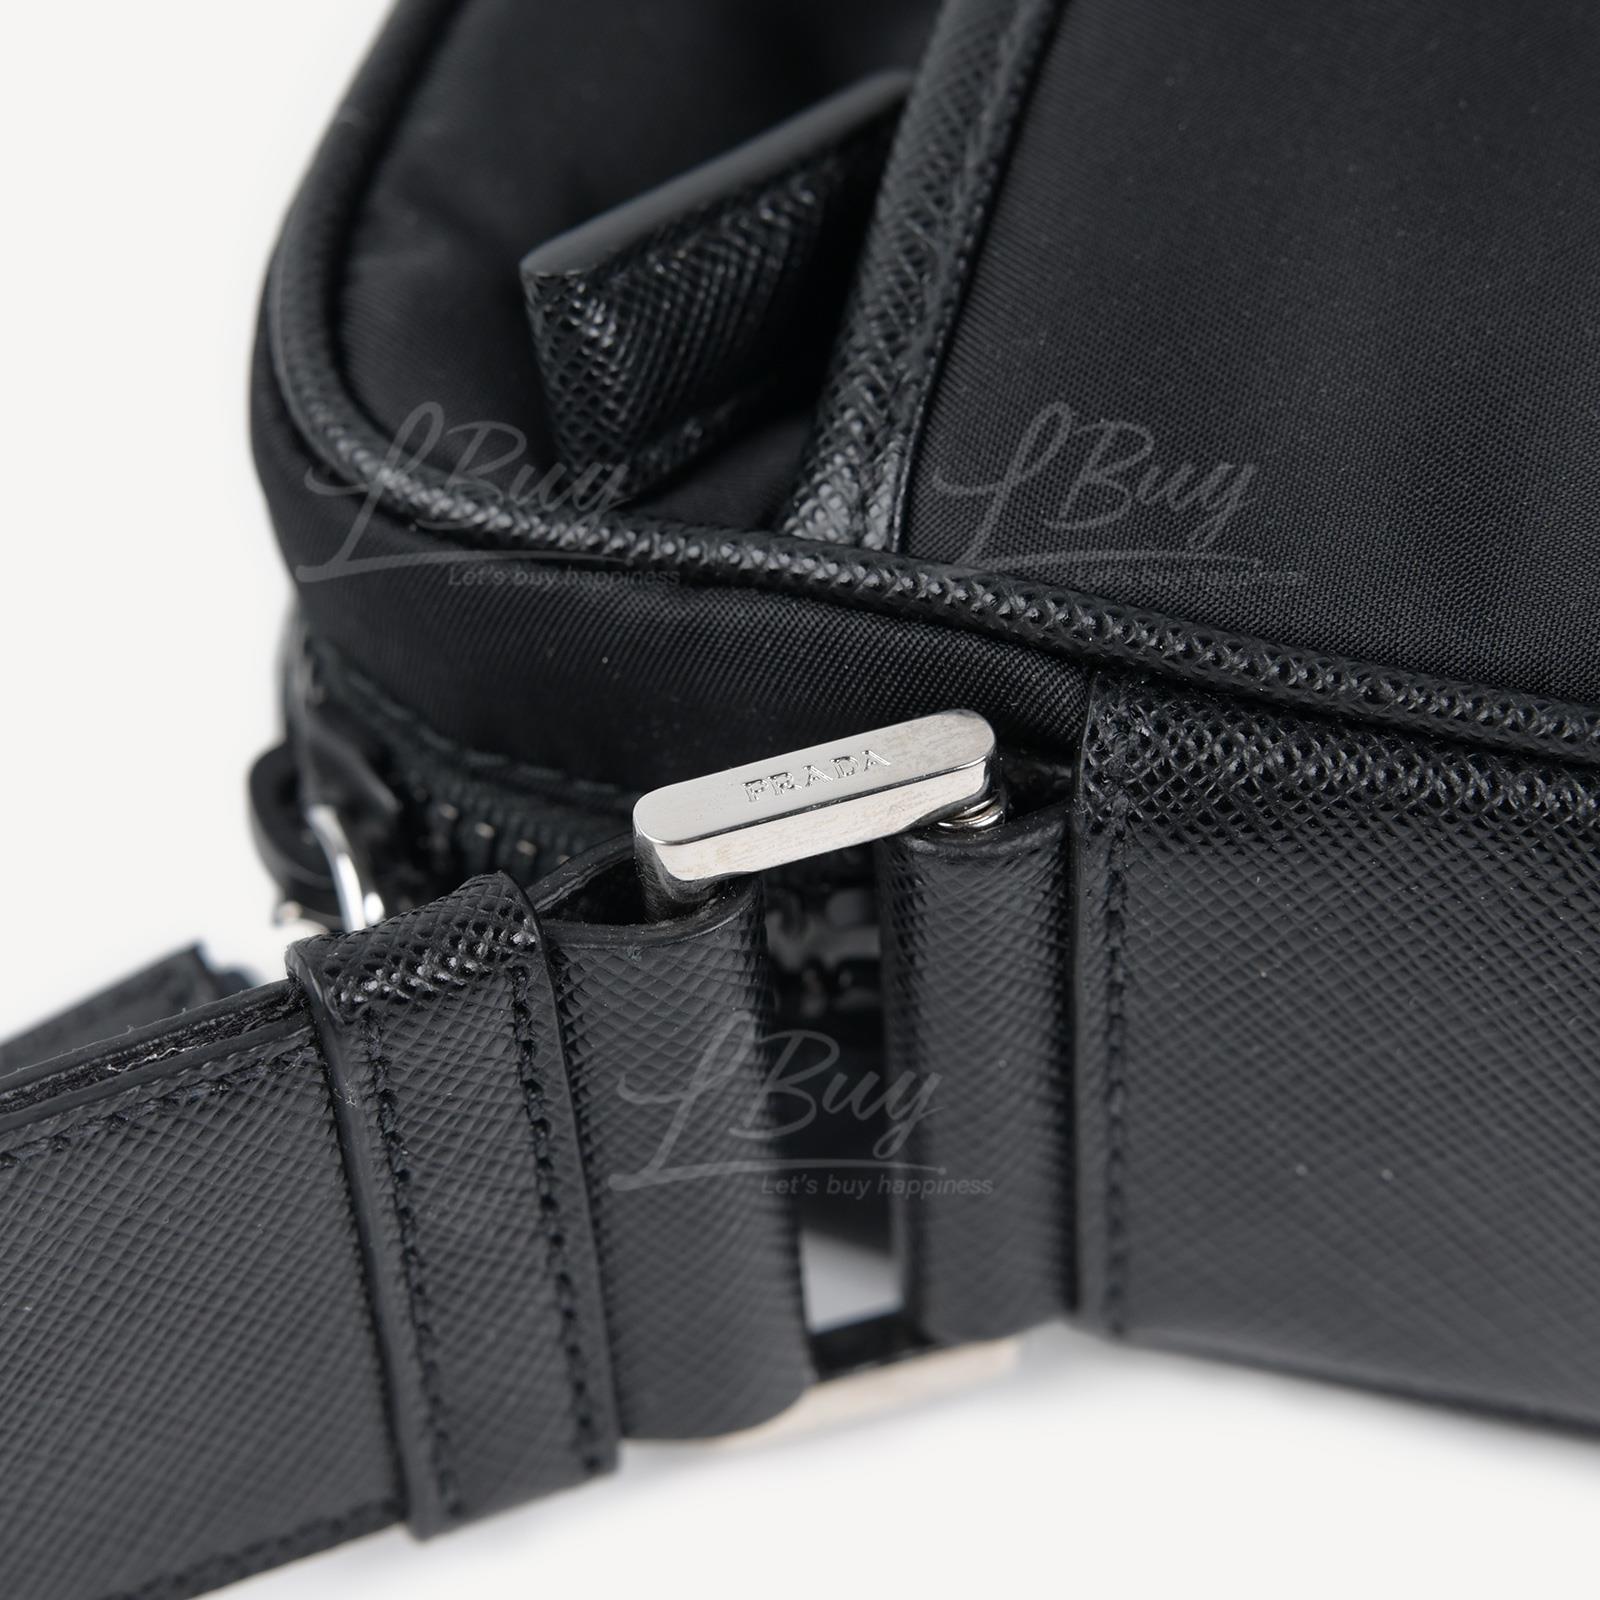 PRADA: nylon shoulder bag - Black  Prada shoulder bag 2VH112 2DMH